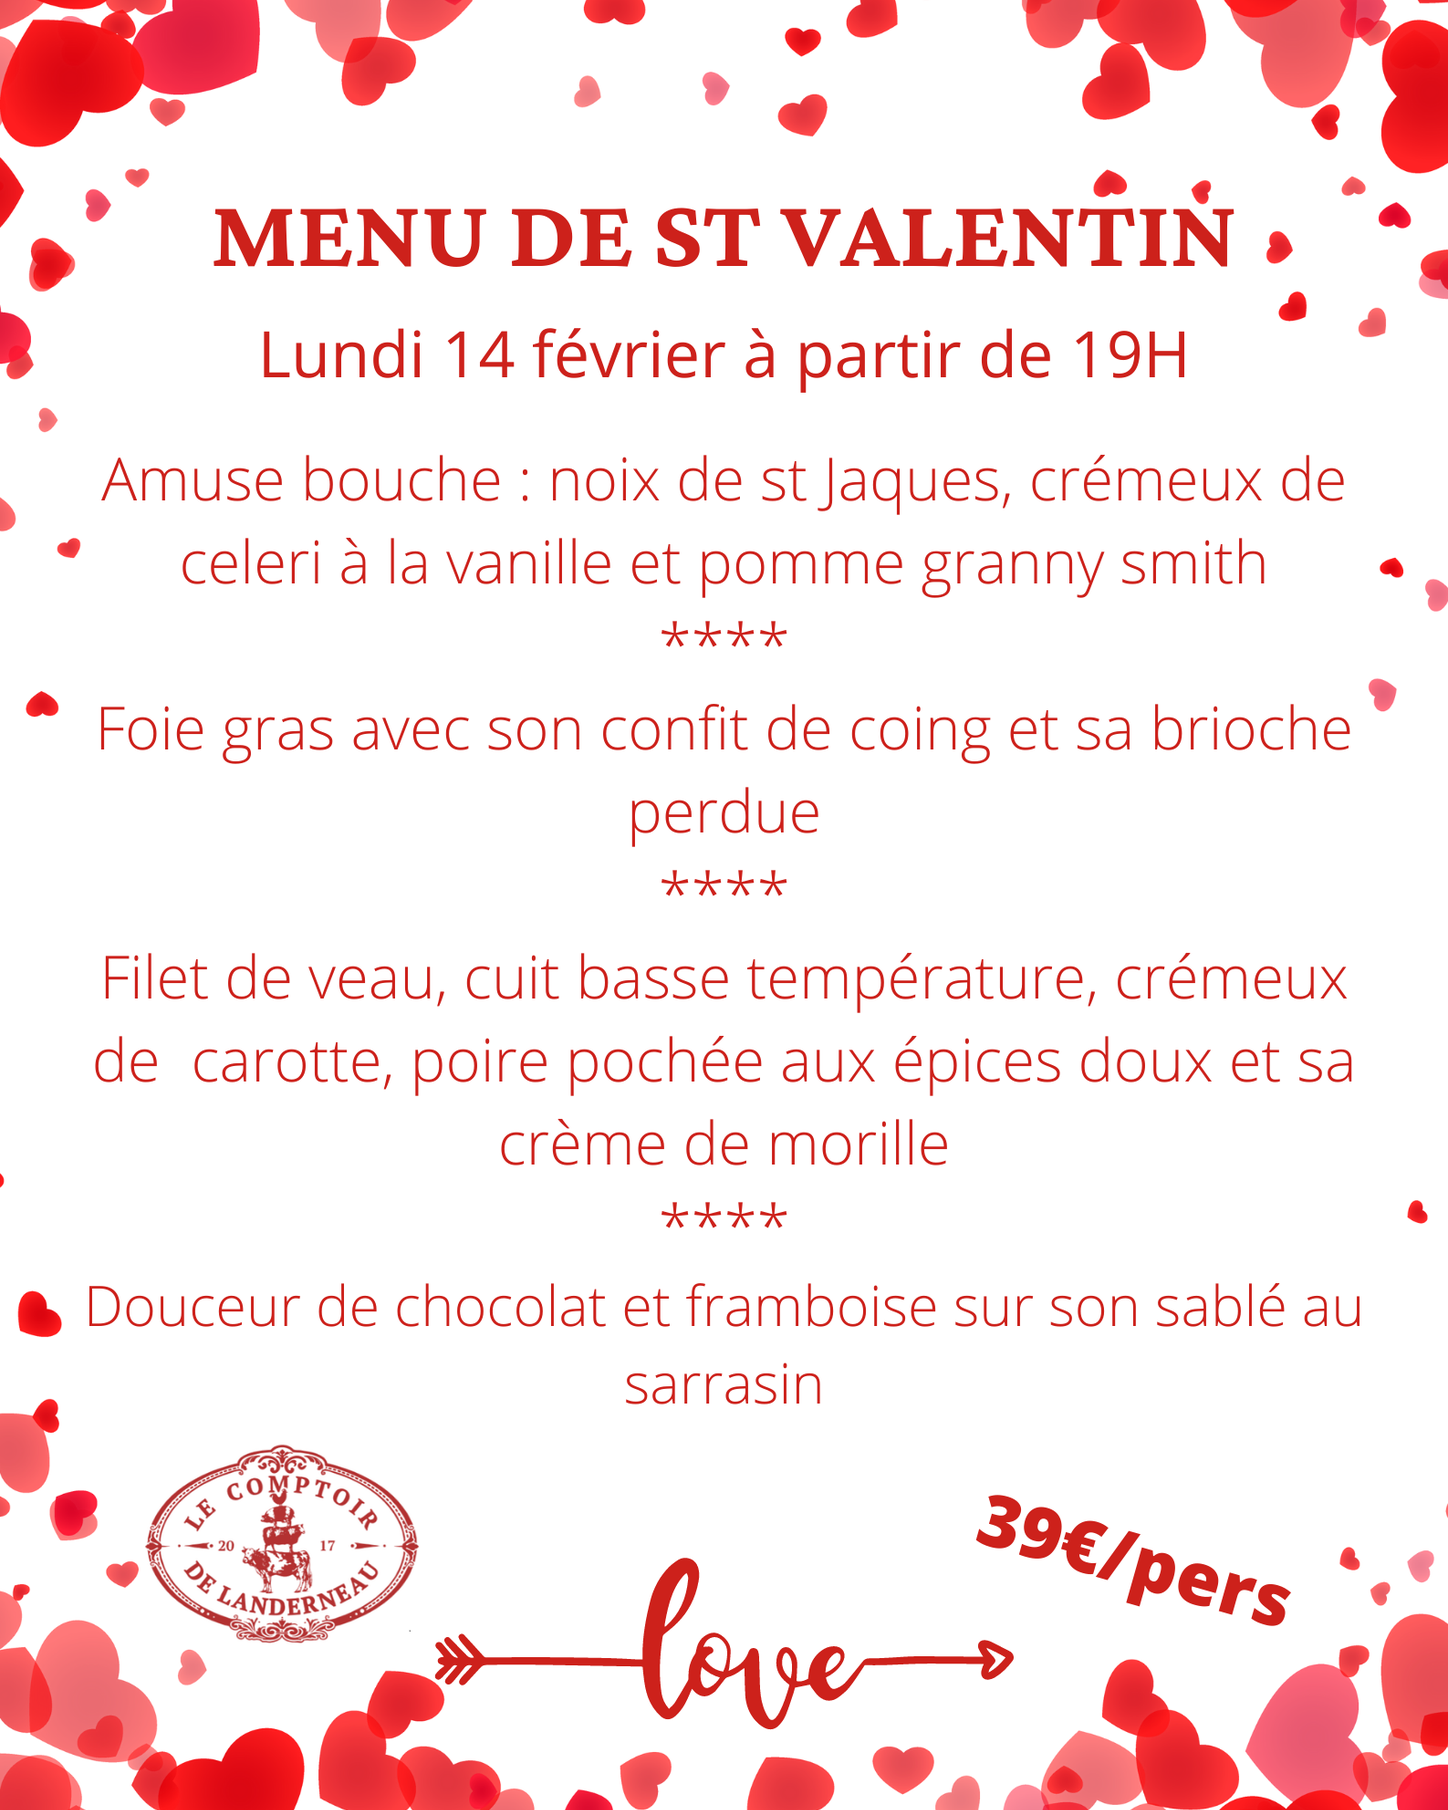 menu special saint valentin restaurant comptoir de landerneau